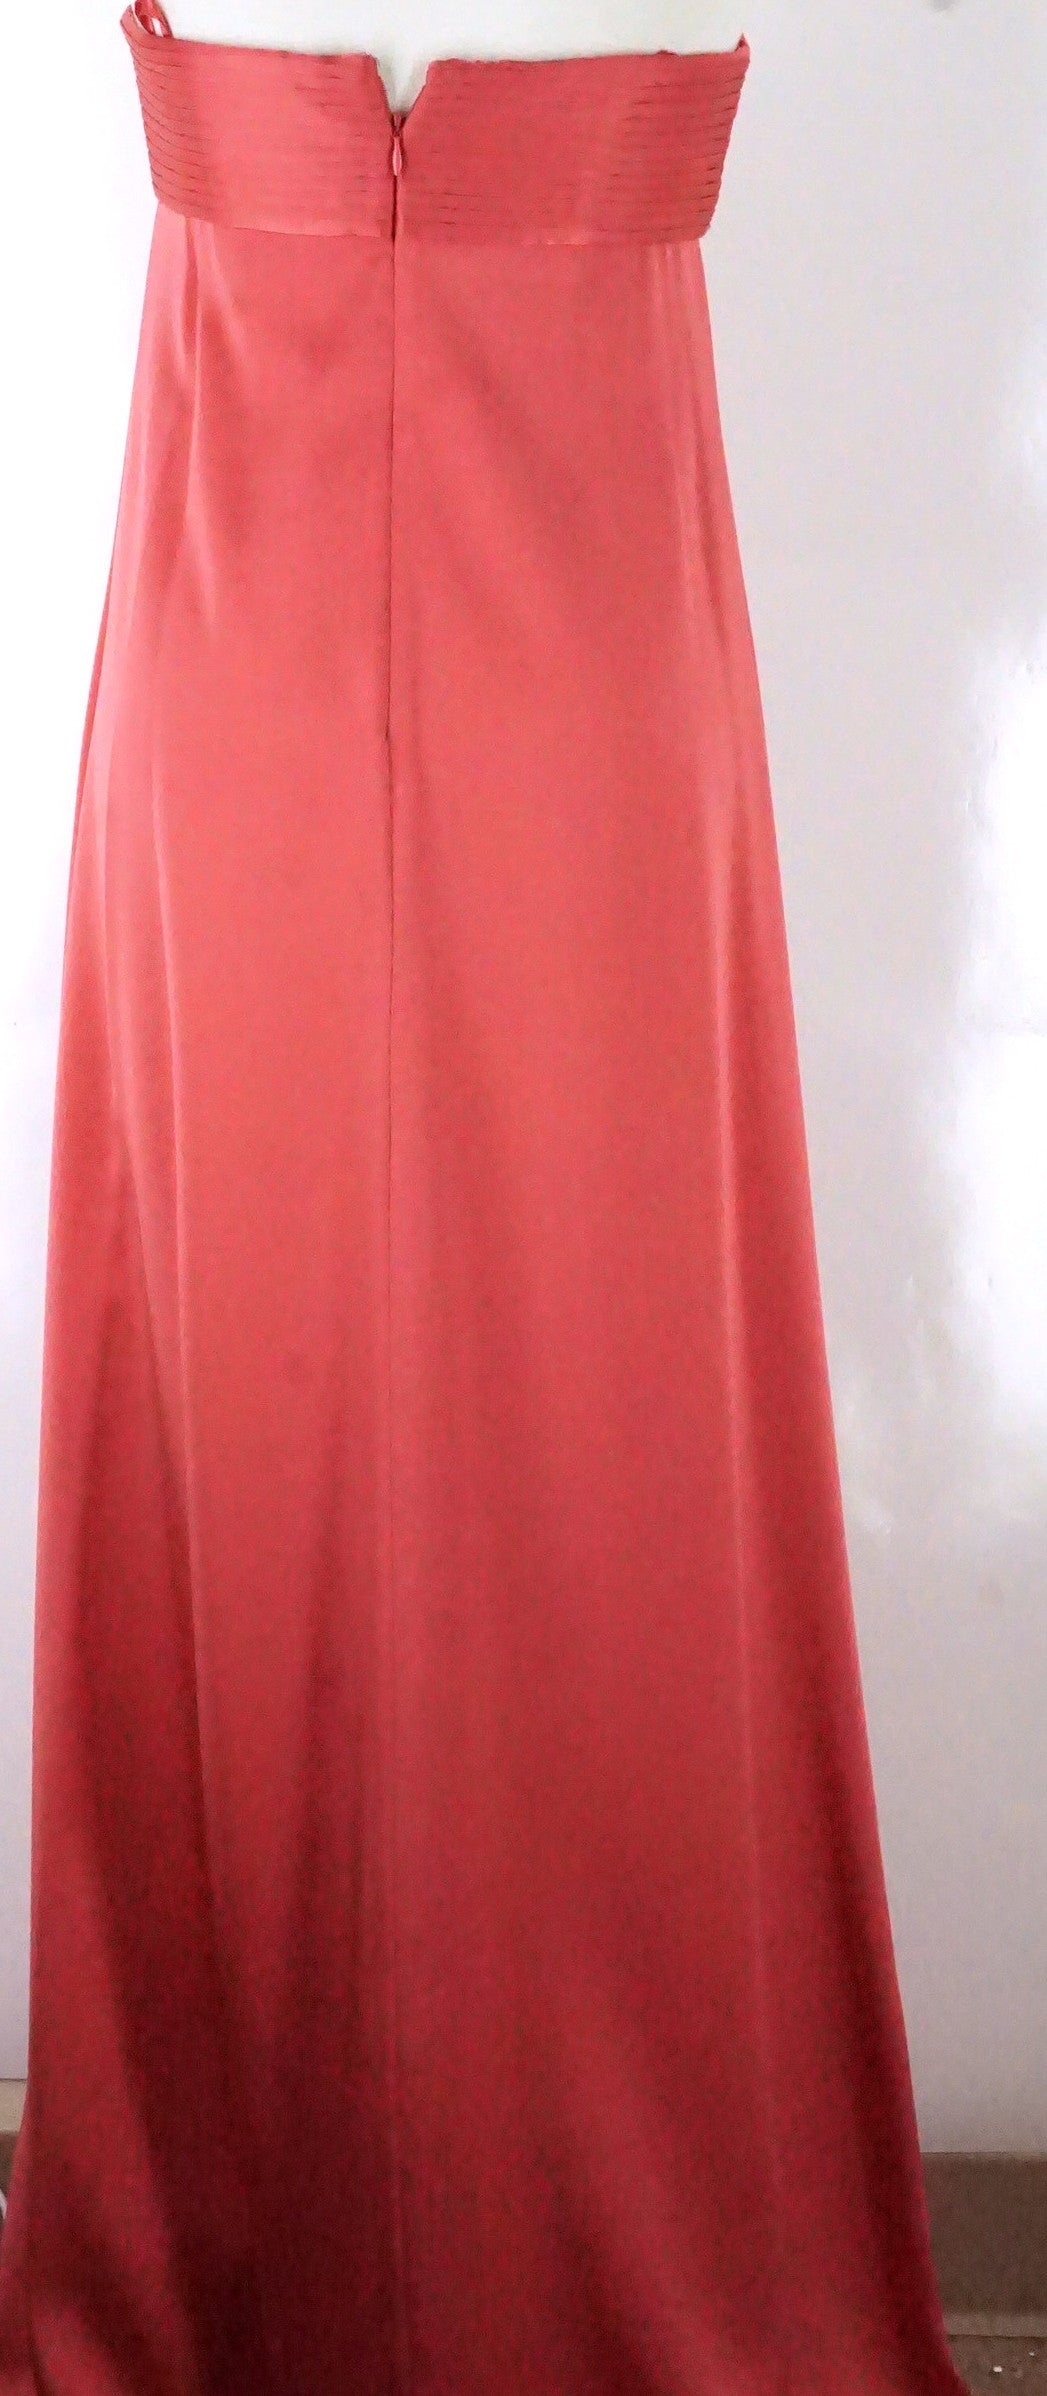 BCBG Maxazria Watermelon Pink Woven Silk Strapless Dress size 4 NWT $$288